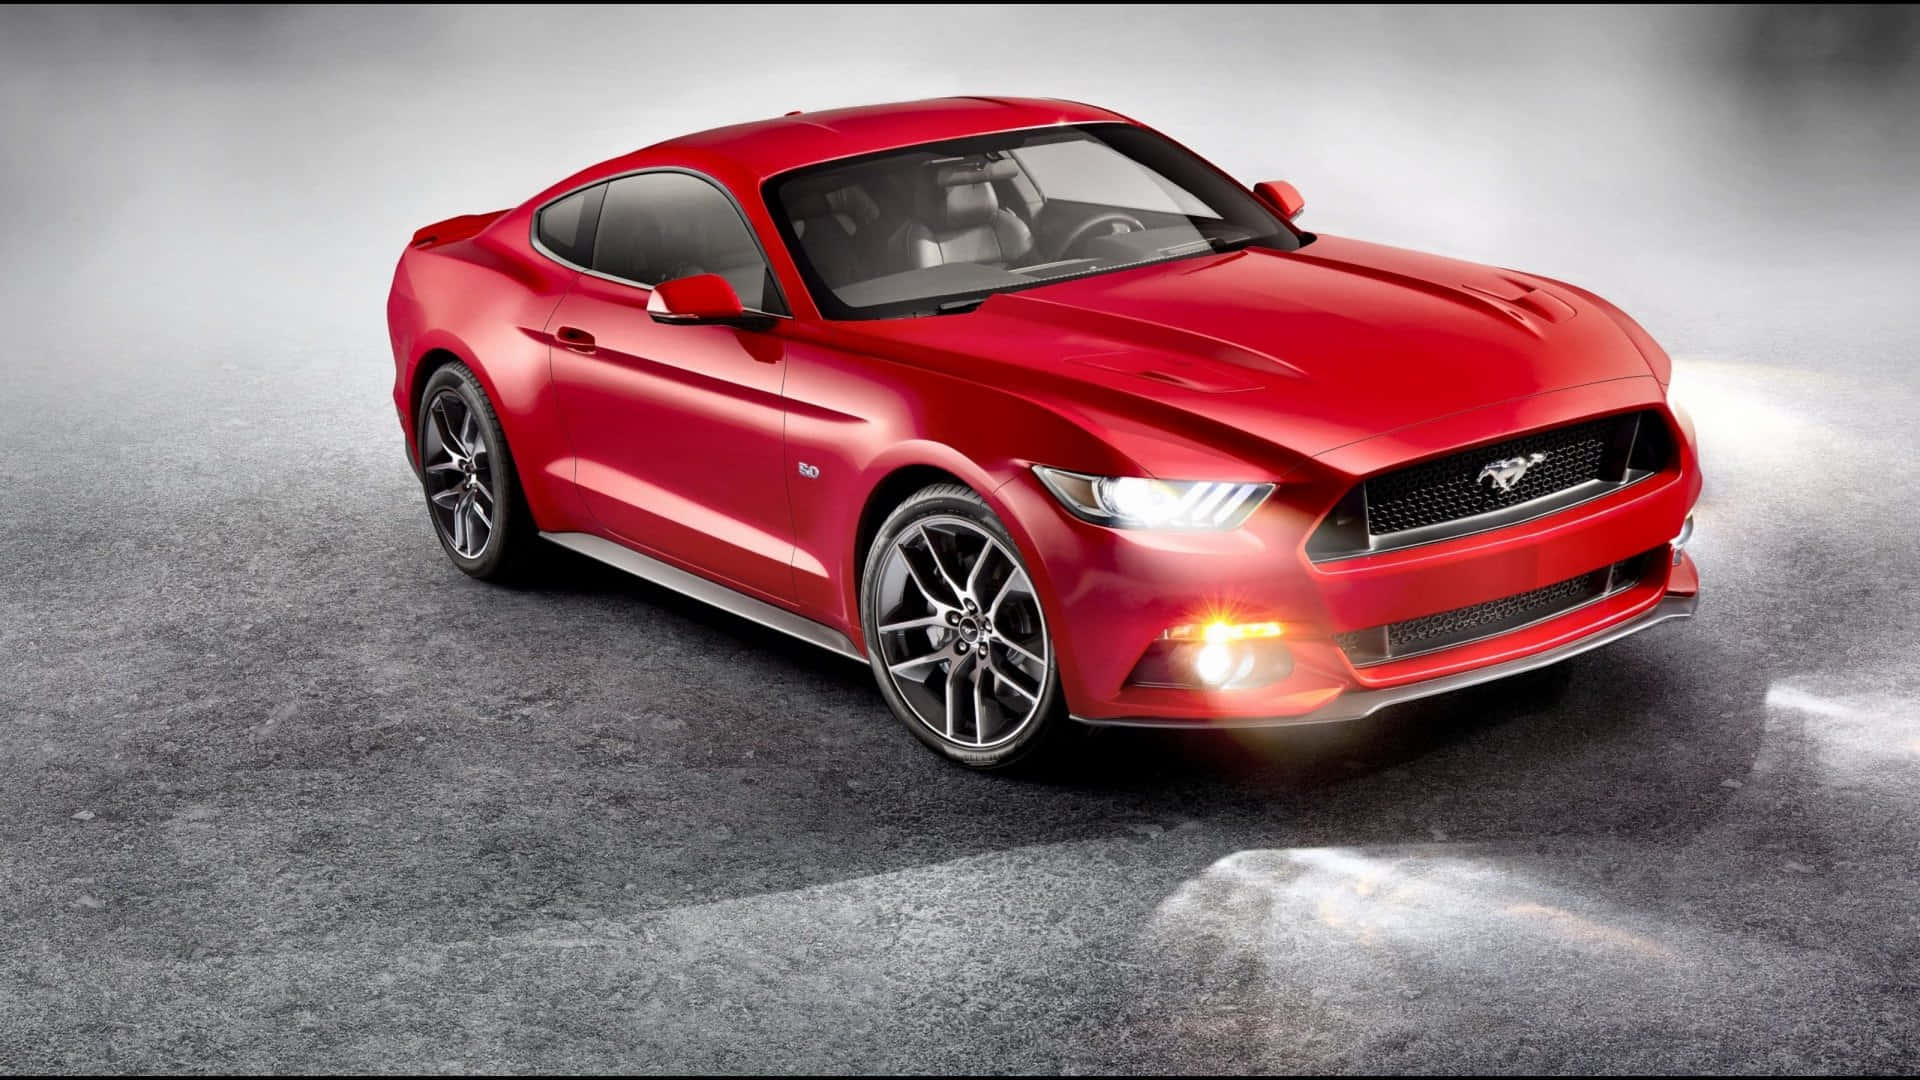 Ford Mustang 2015 Sports Car Model Wallpaper